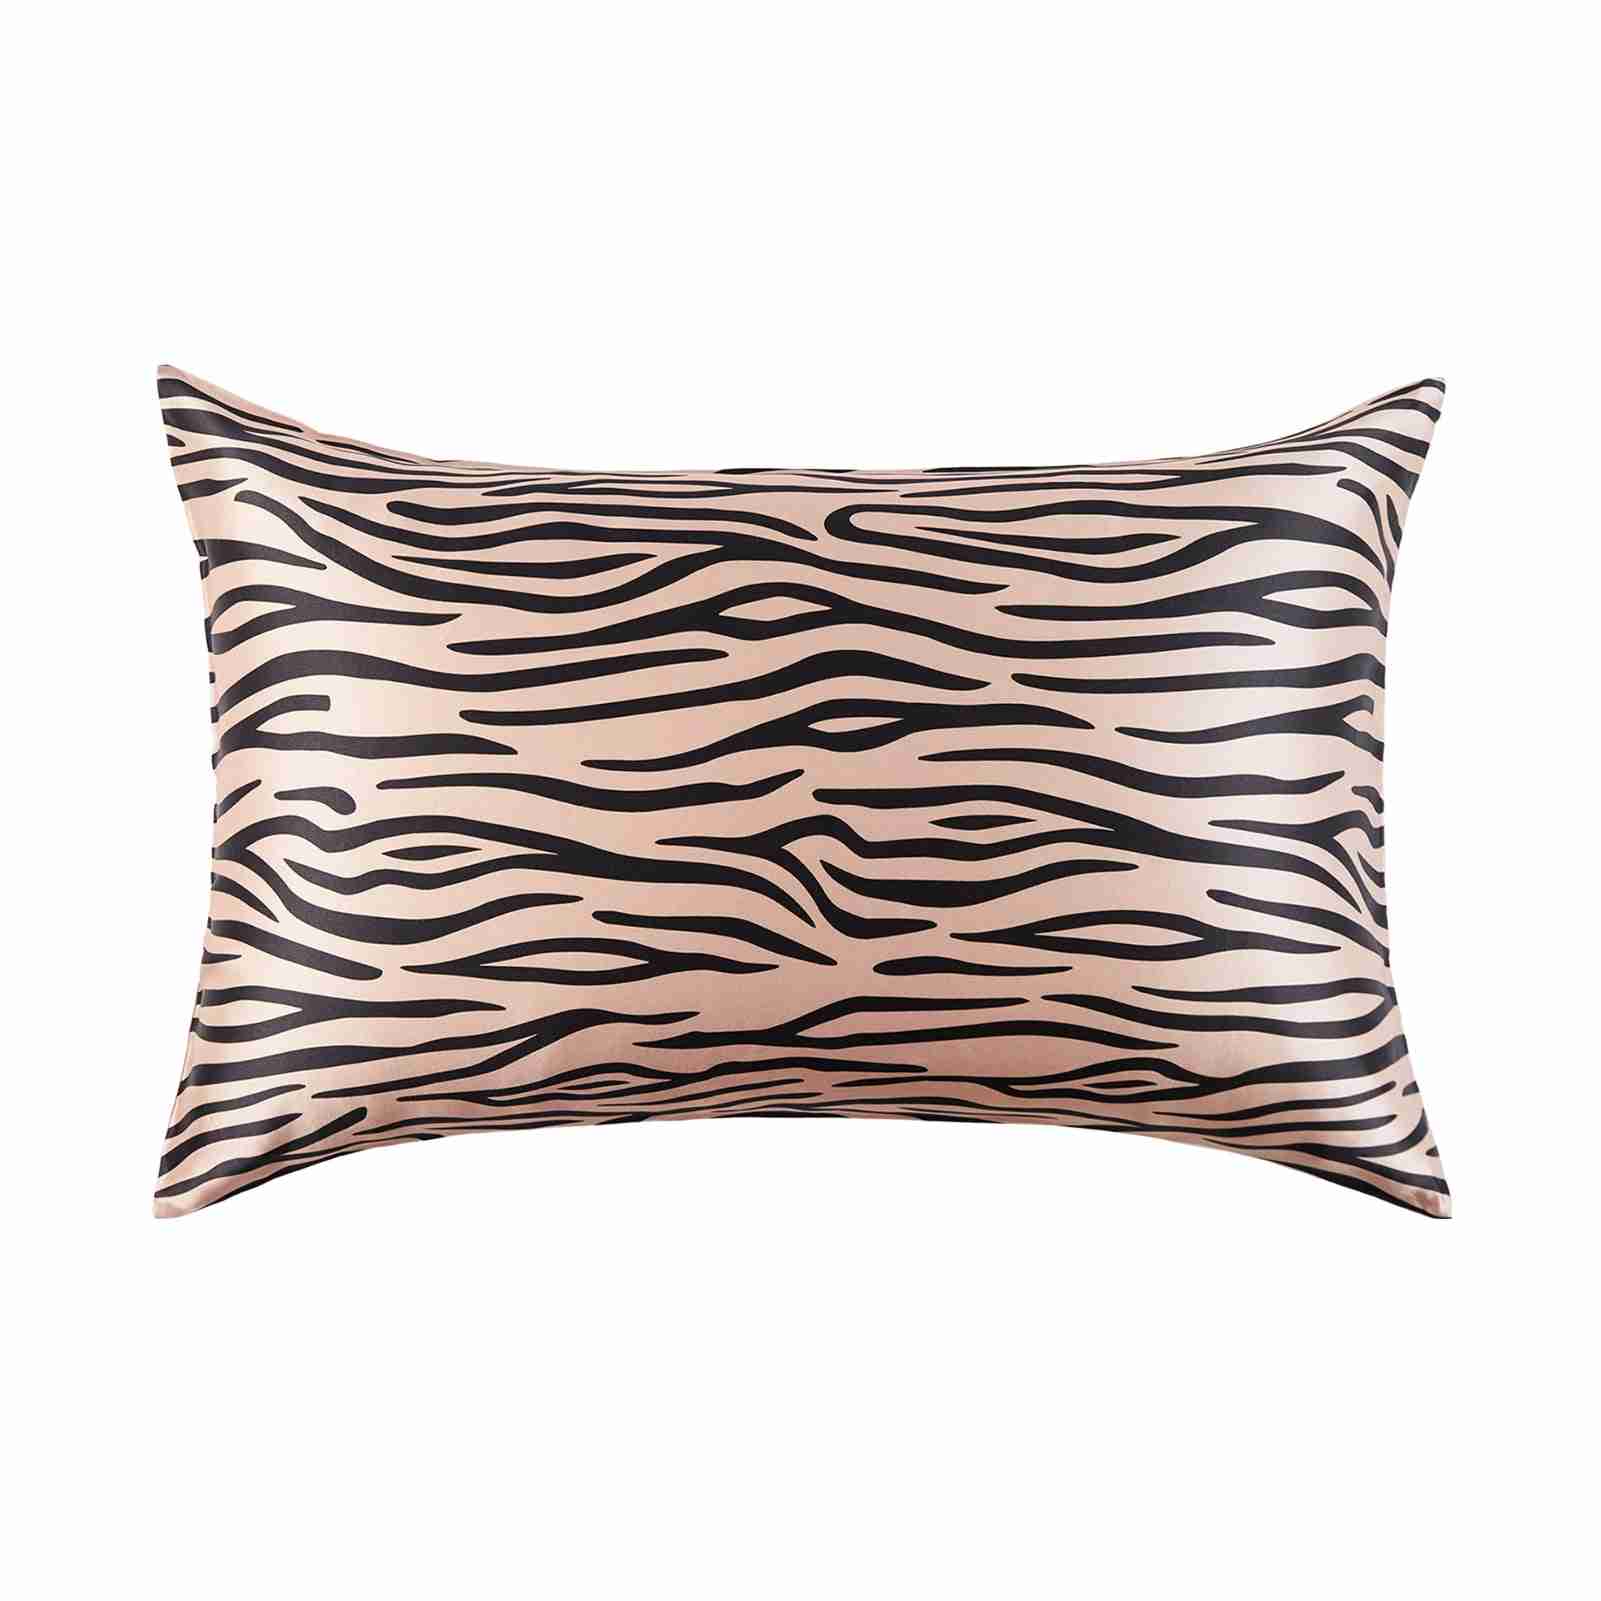 New Printed zebra silk pillowcase